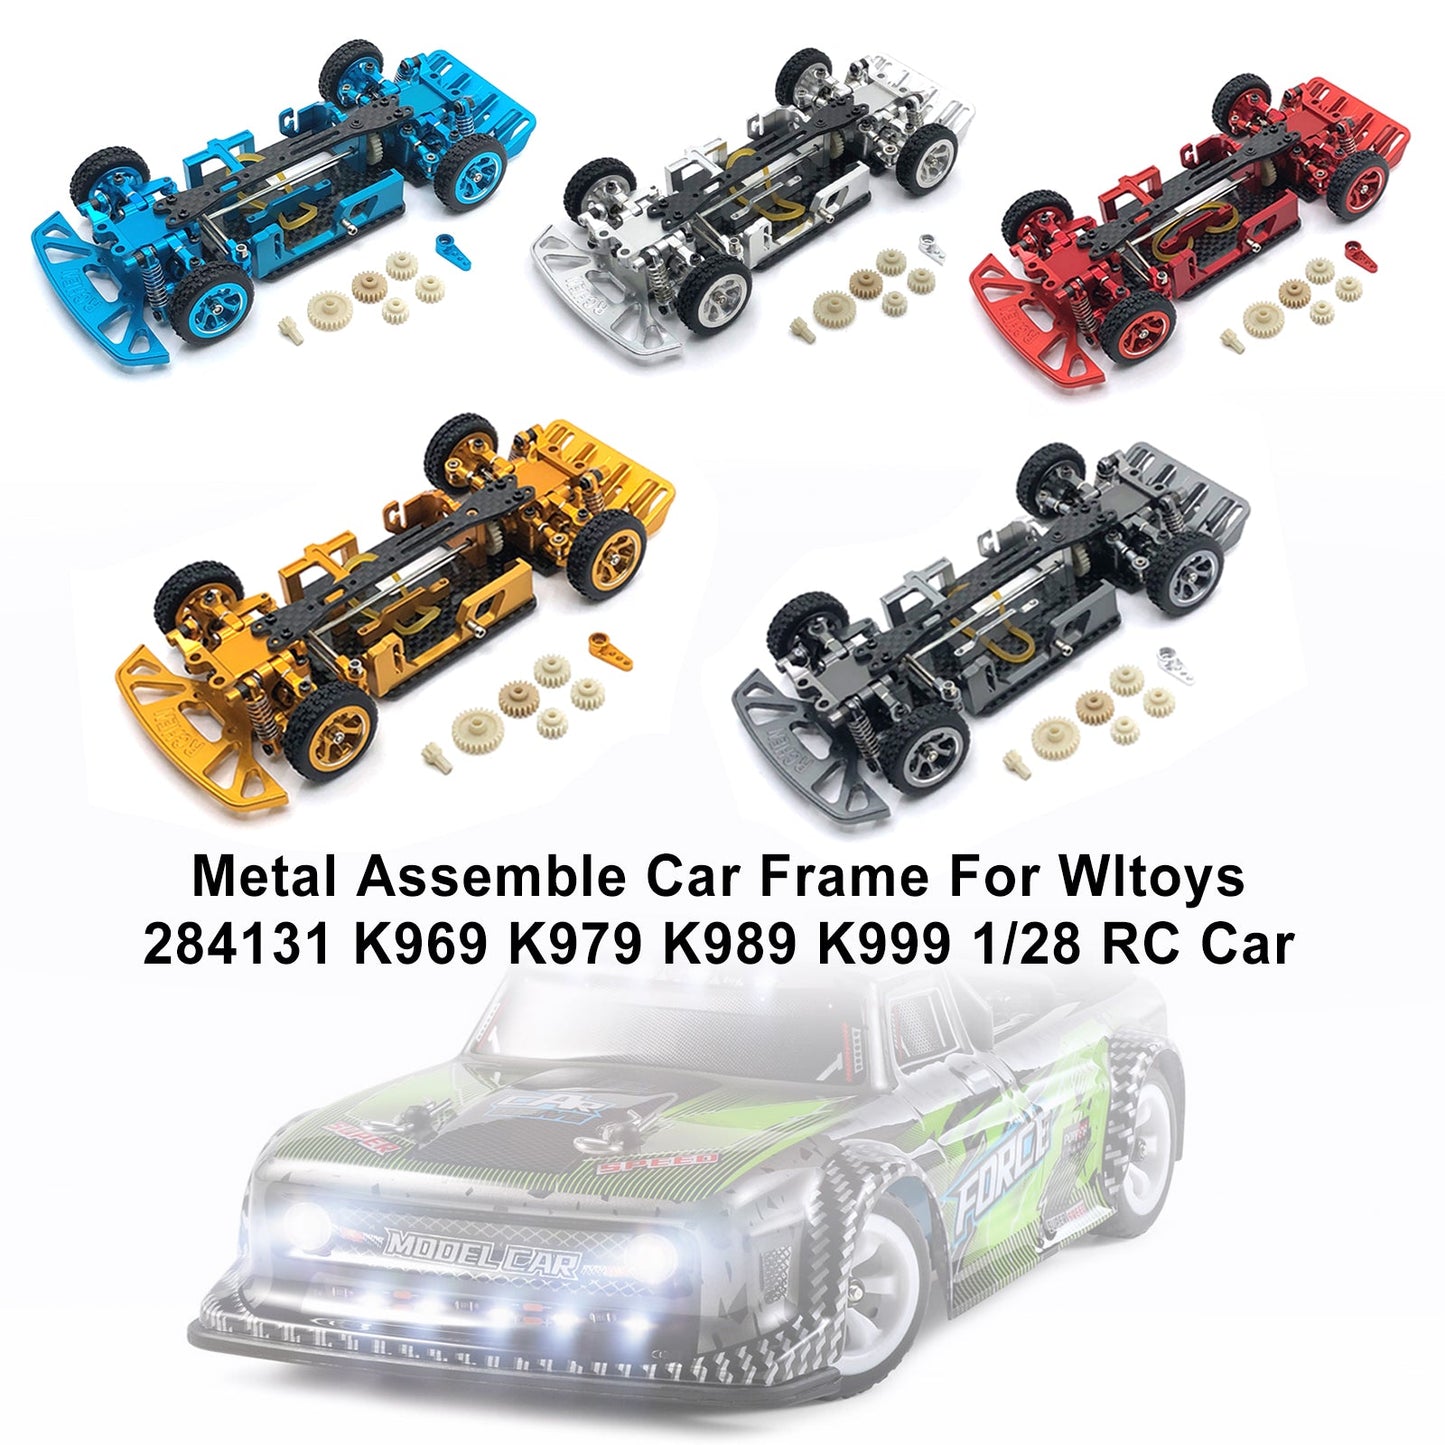 Wltoys 284131 K969 K979 K989 K999 1/28 RC Car Metal Assemble Car Frame